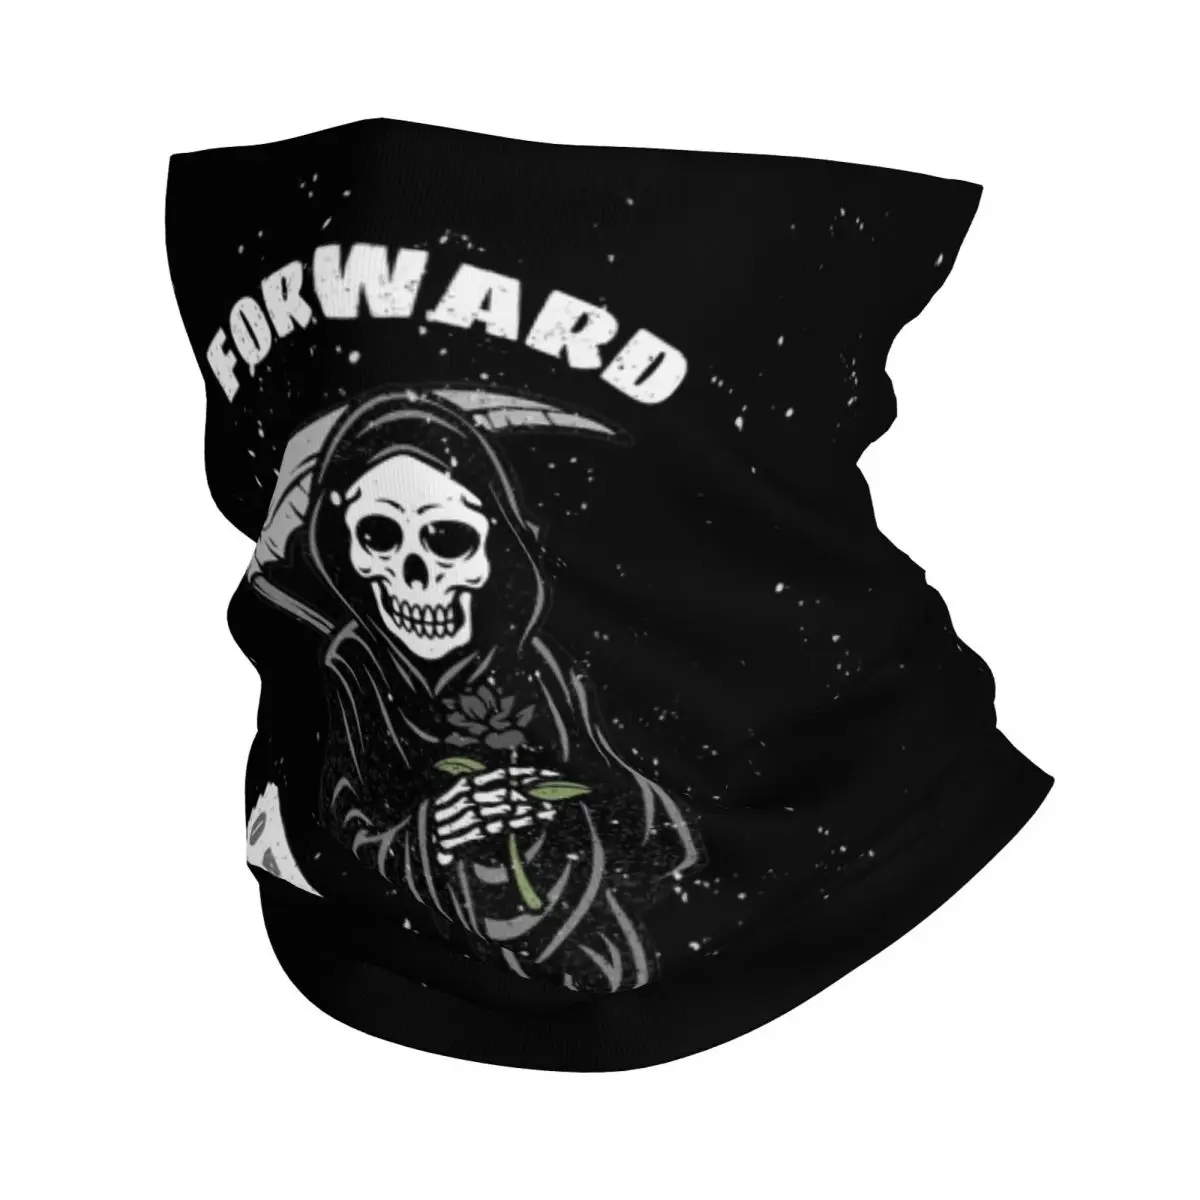 

Forward Observations Group GBRS Bandana Neck Cover Printed Grim Reaper Balaclavas Mask Scarf Warm Headwear for Men Women Adult